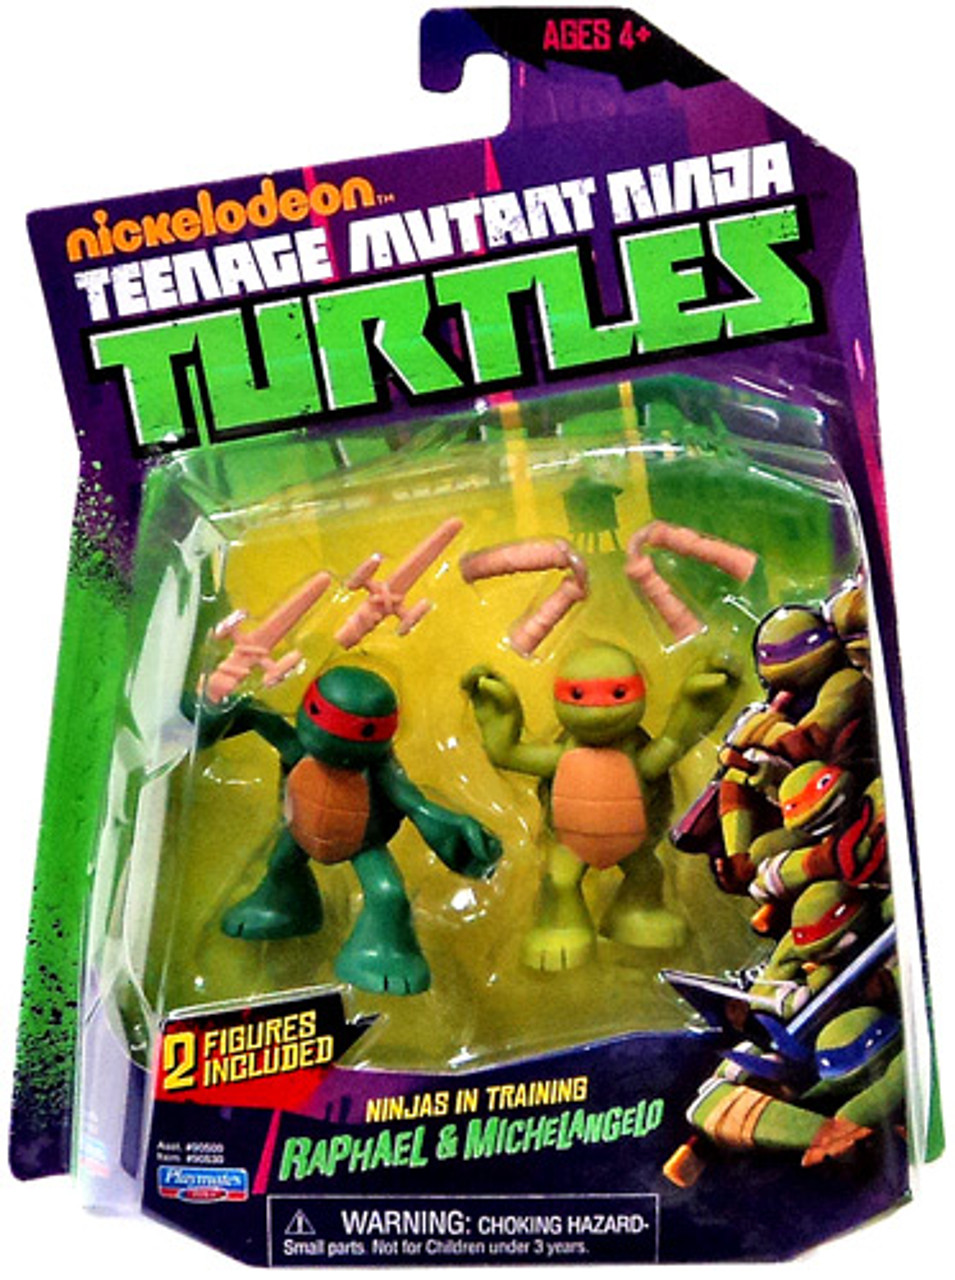 Teenage Mutant Ninja Turtles Nickelodeon Ninjas In Training Raphael Michelangelo 2 Action Figure 2 Pack Playmates Toywiz - ninjas training base roblox